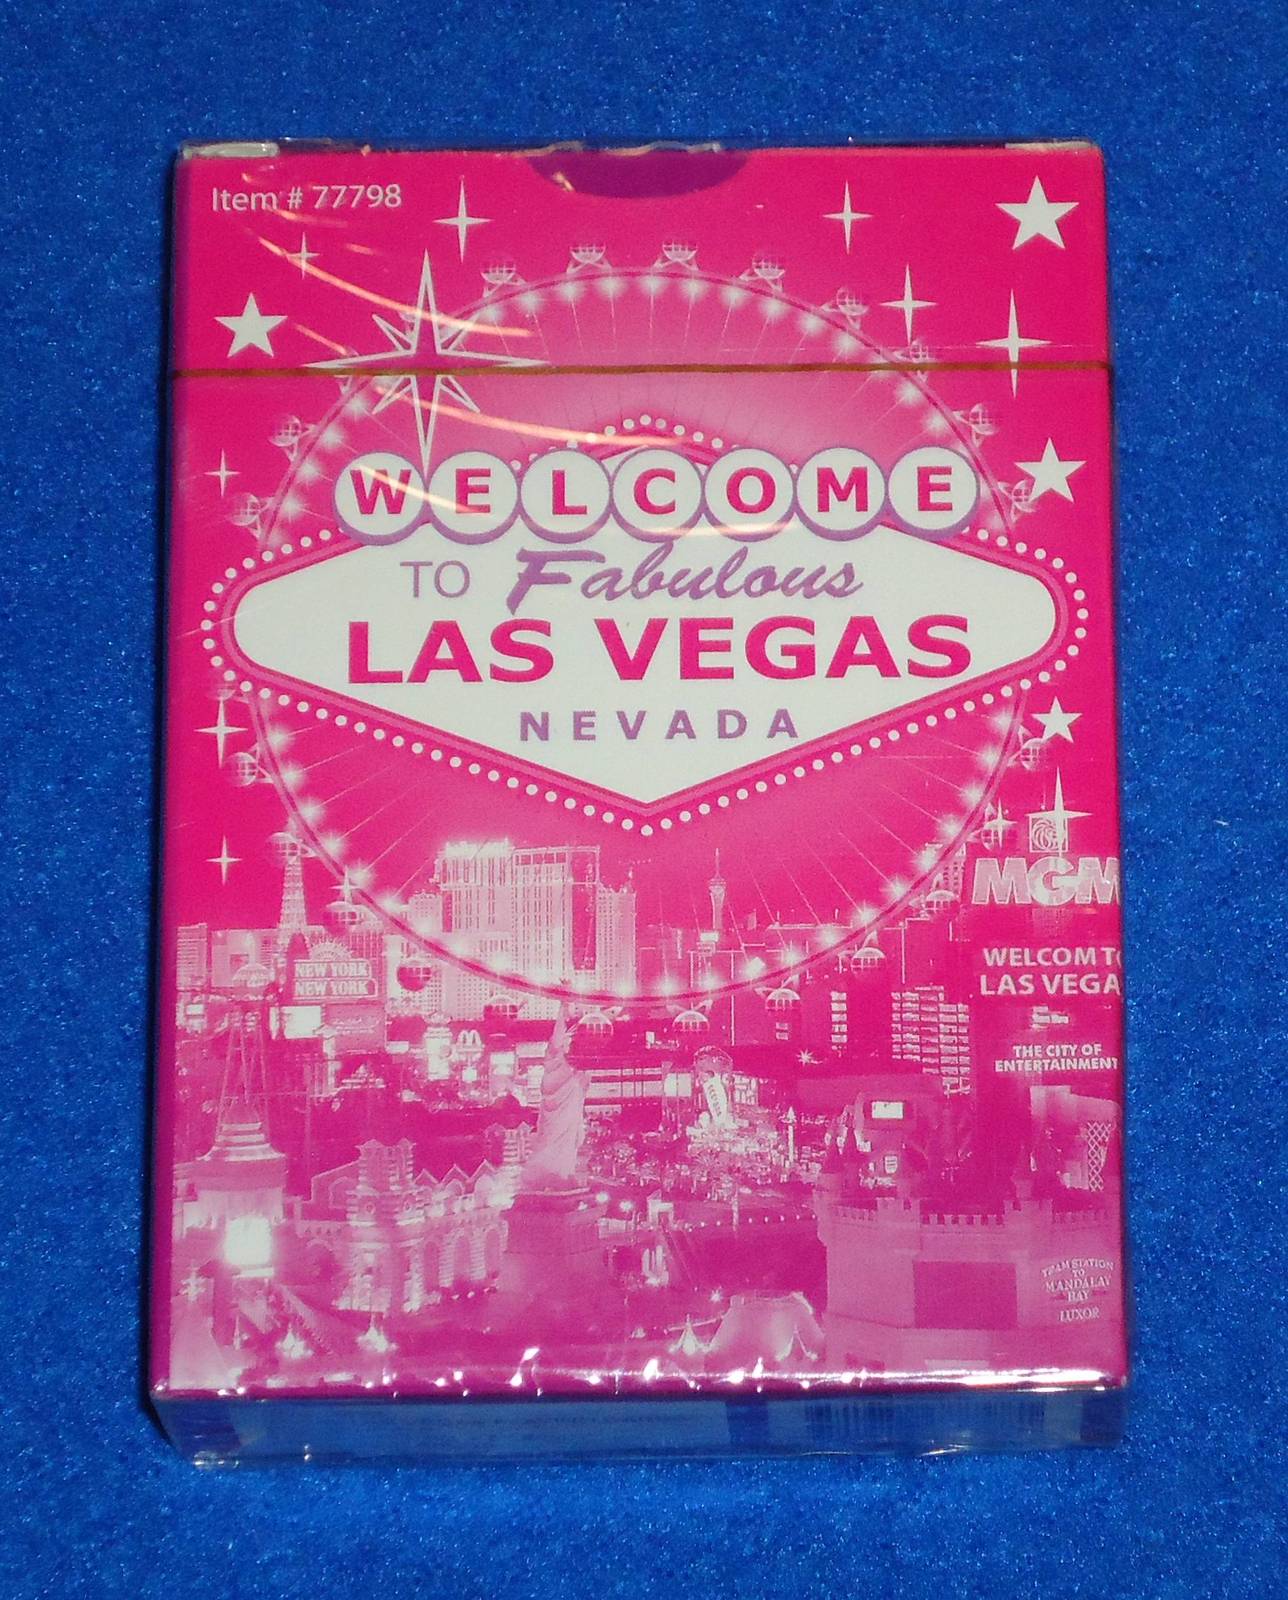 High Roller Playing Cards, Las Vegas Cards